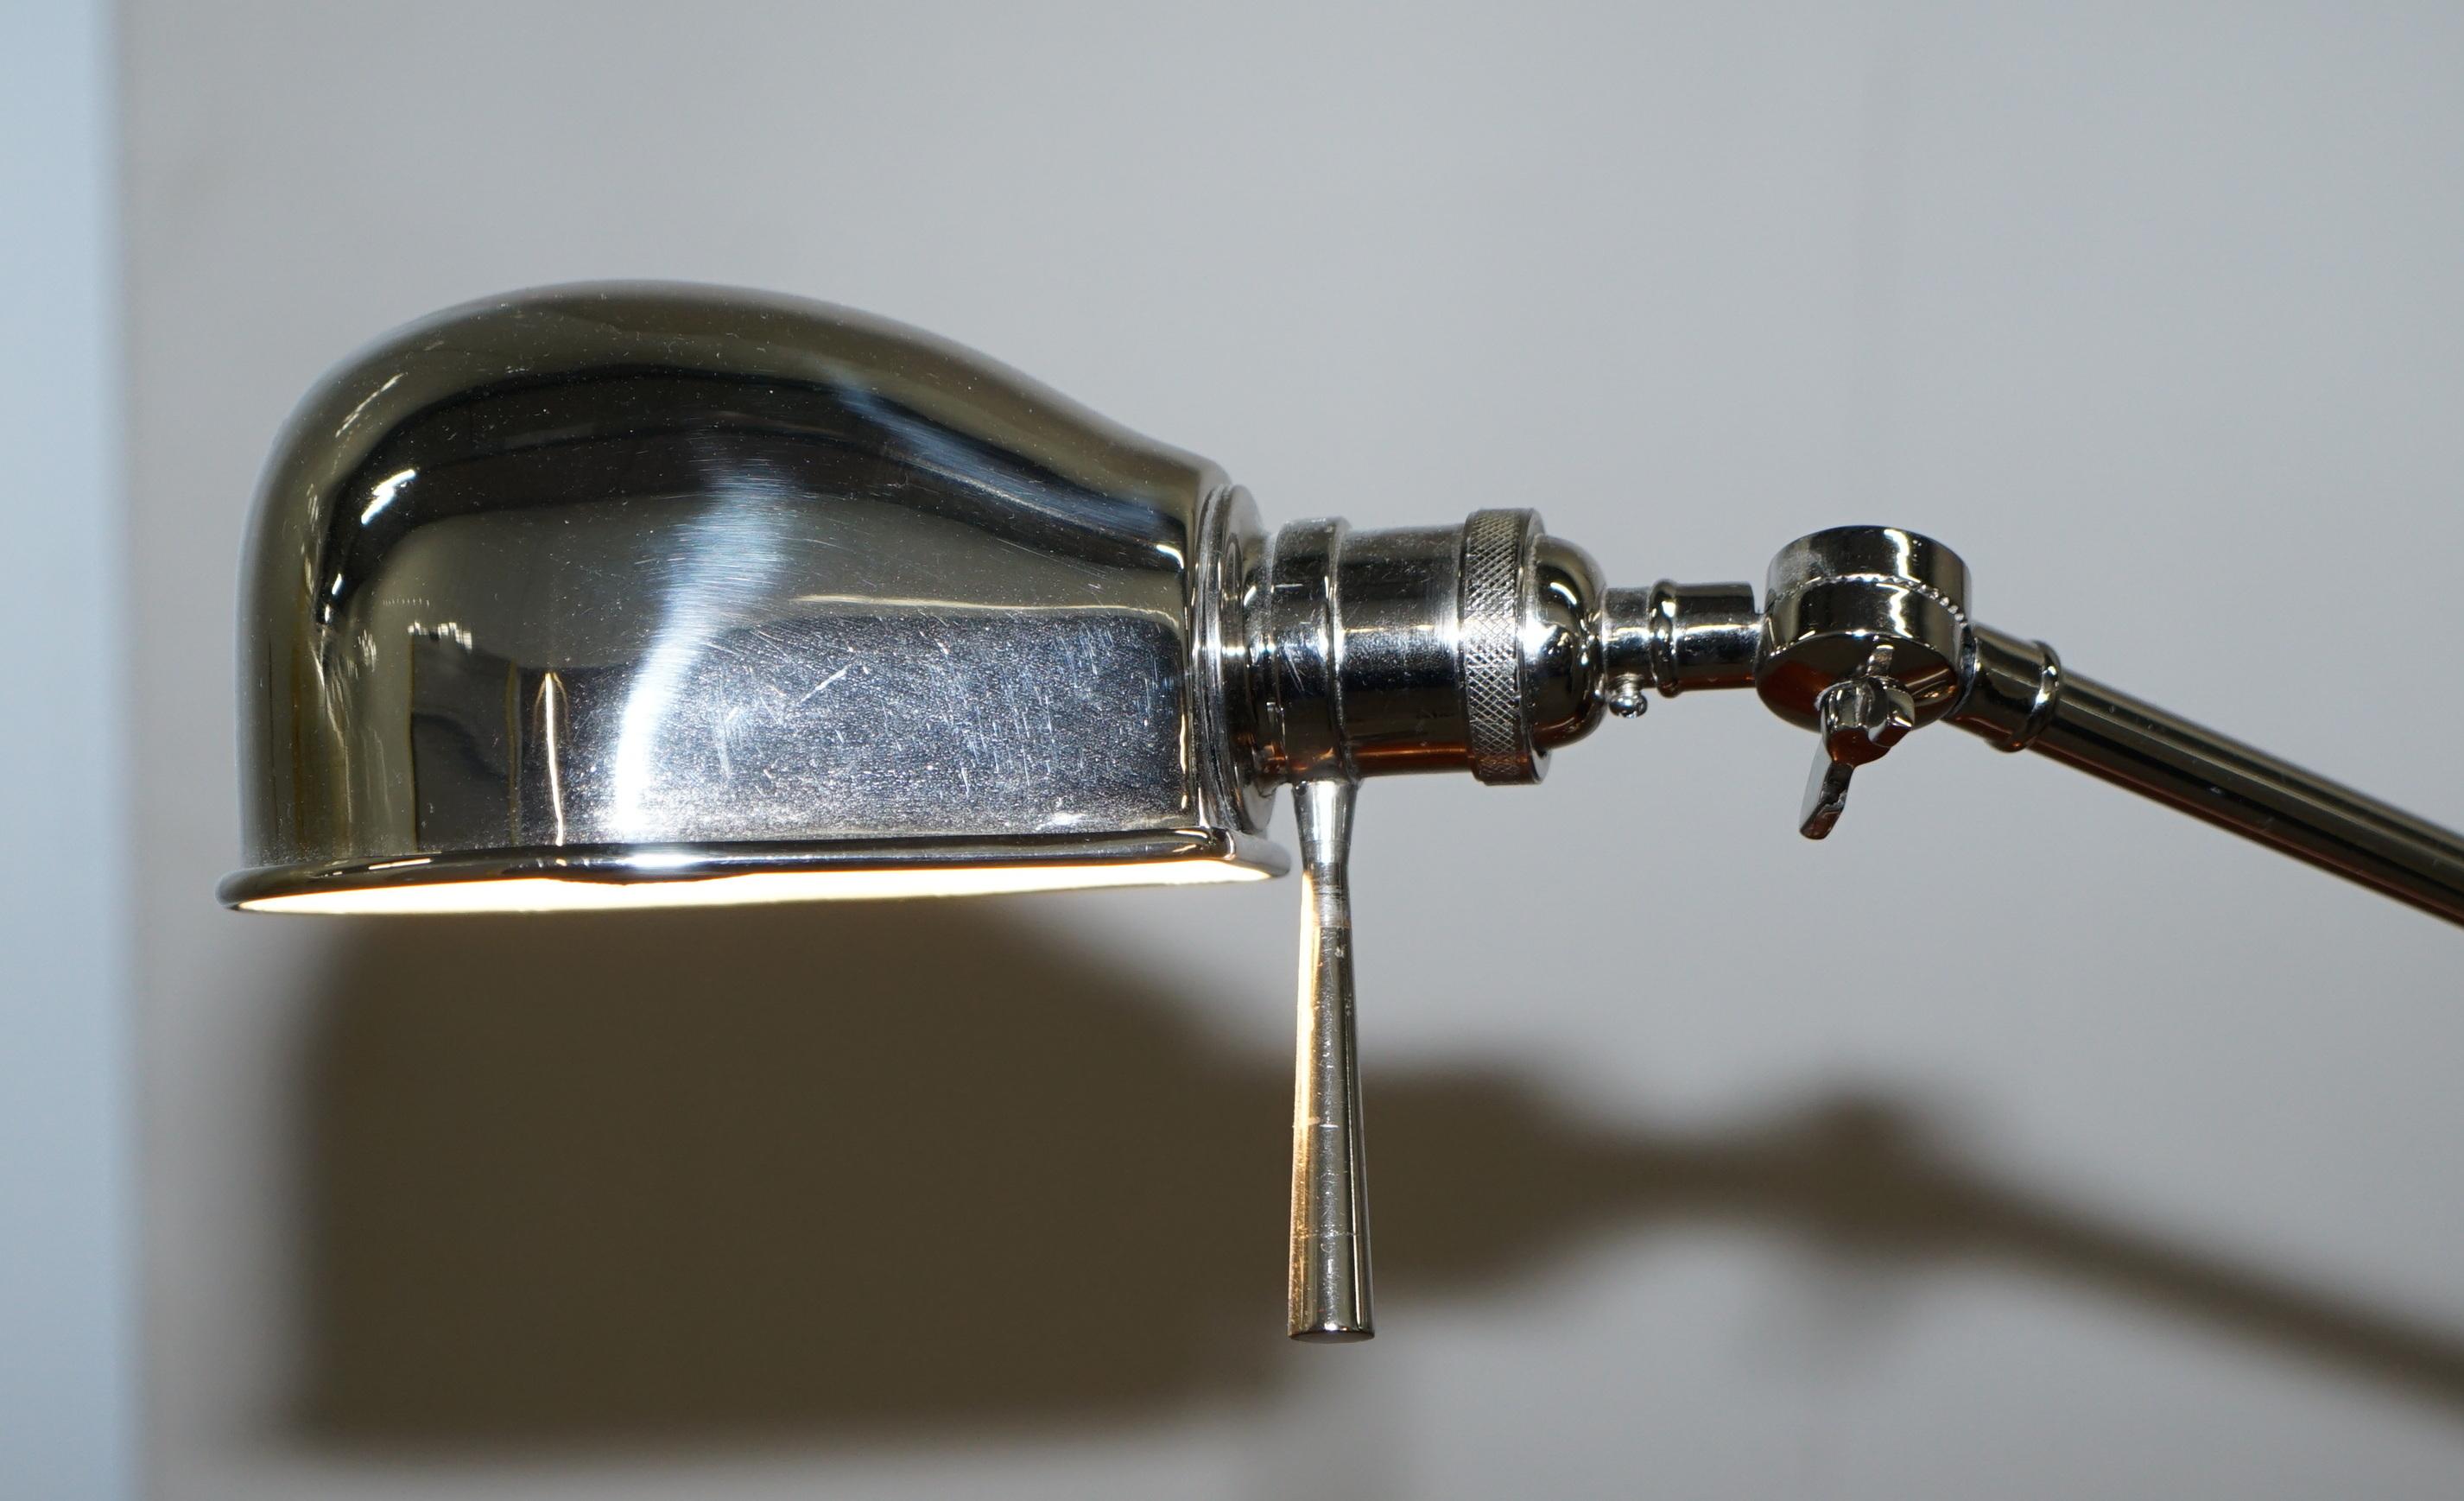 20th Century Large Ralph Lauren Boom Arm Est 1967 Articulated Table Lamp Tilt Functions